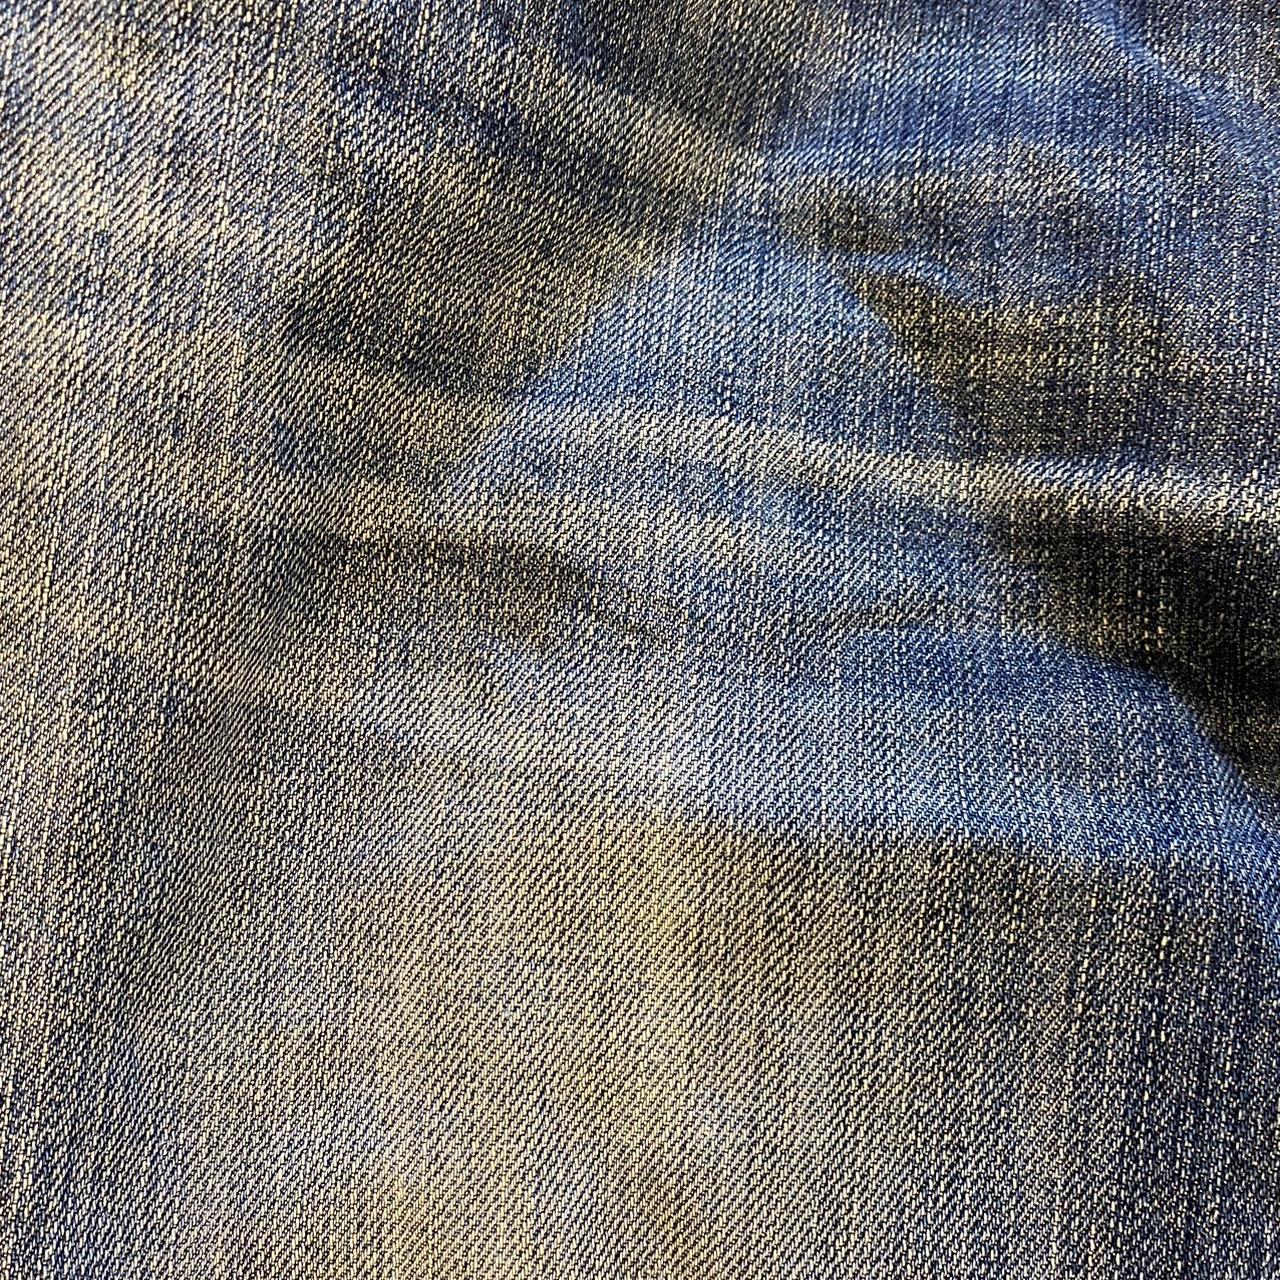 levi’s vintage jeans 504 minor stain (see last picture) - Depop